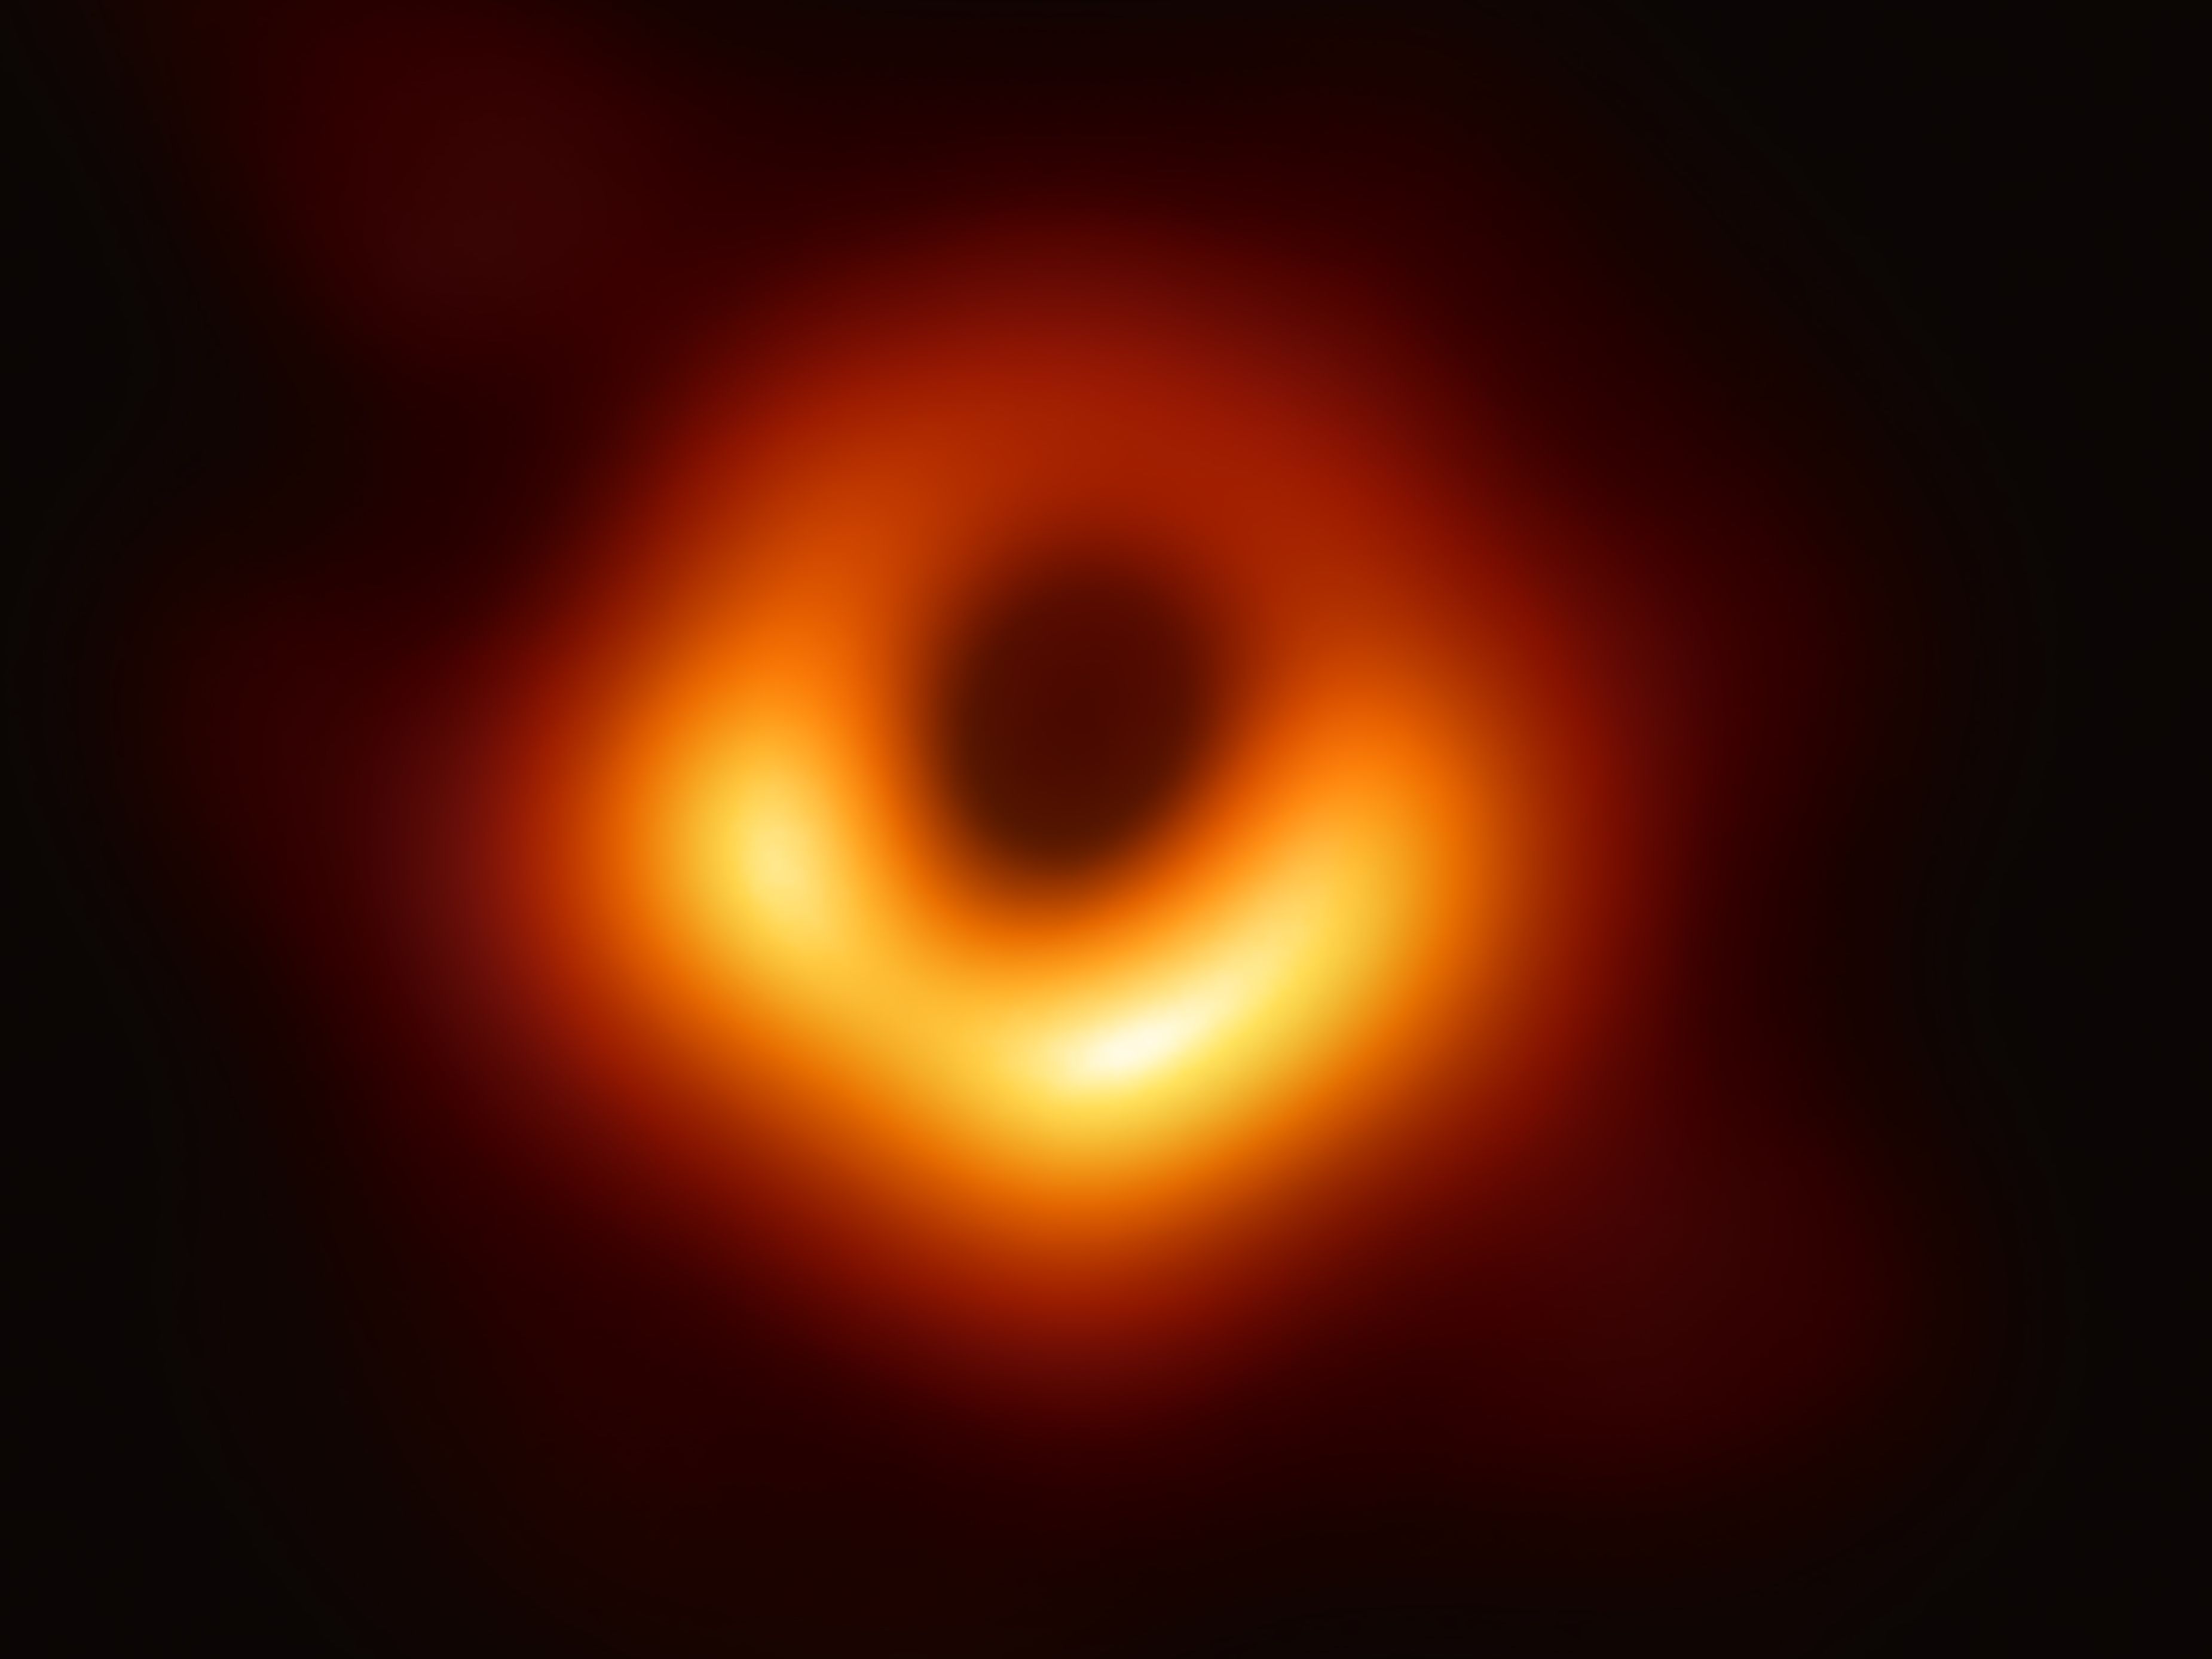 black-hole-a-consensus-32a870a982f0c4f503914c6006dfdd05366678f7.jpg